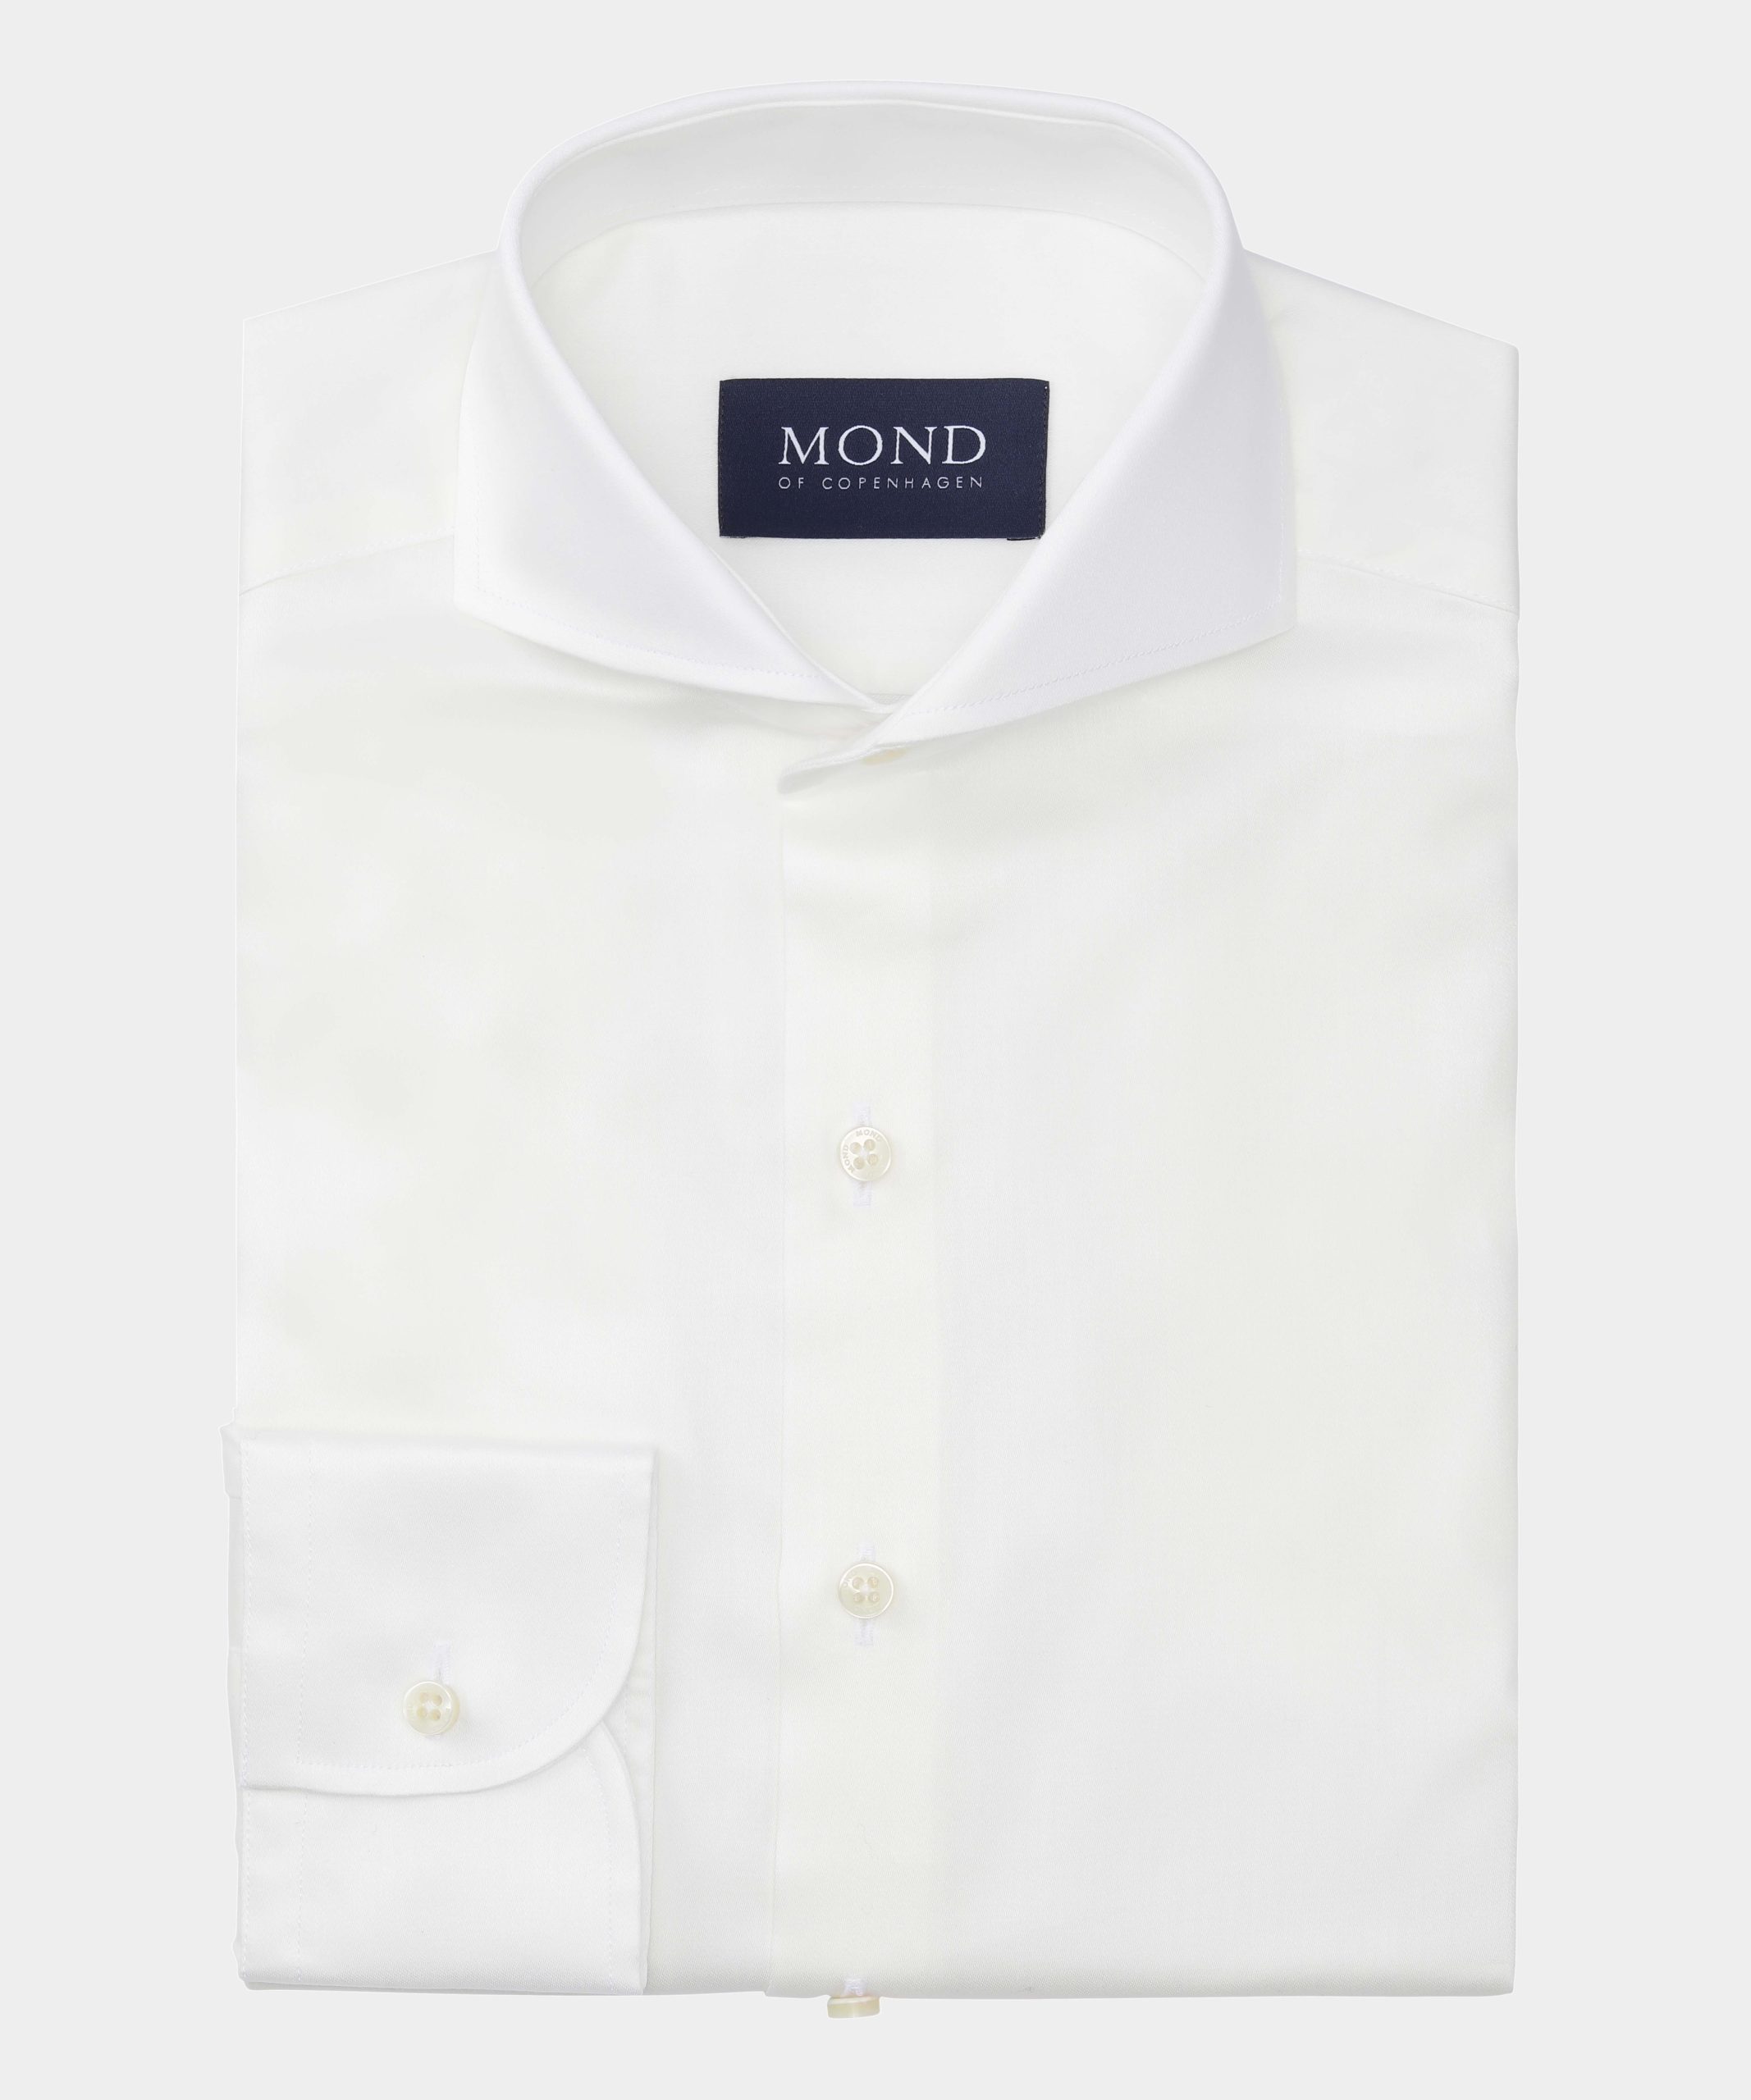 Off-white Journey Satin Piquet custom shirt by mond of copenhagen